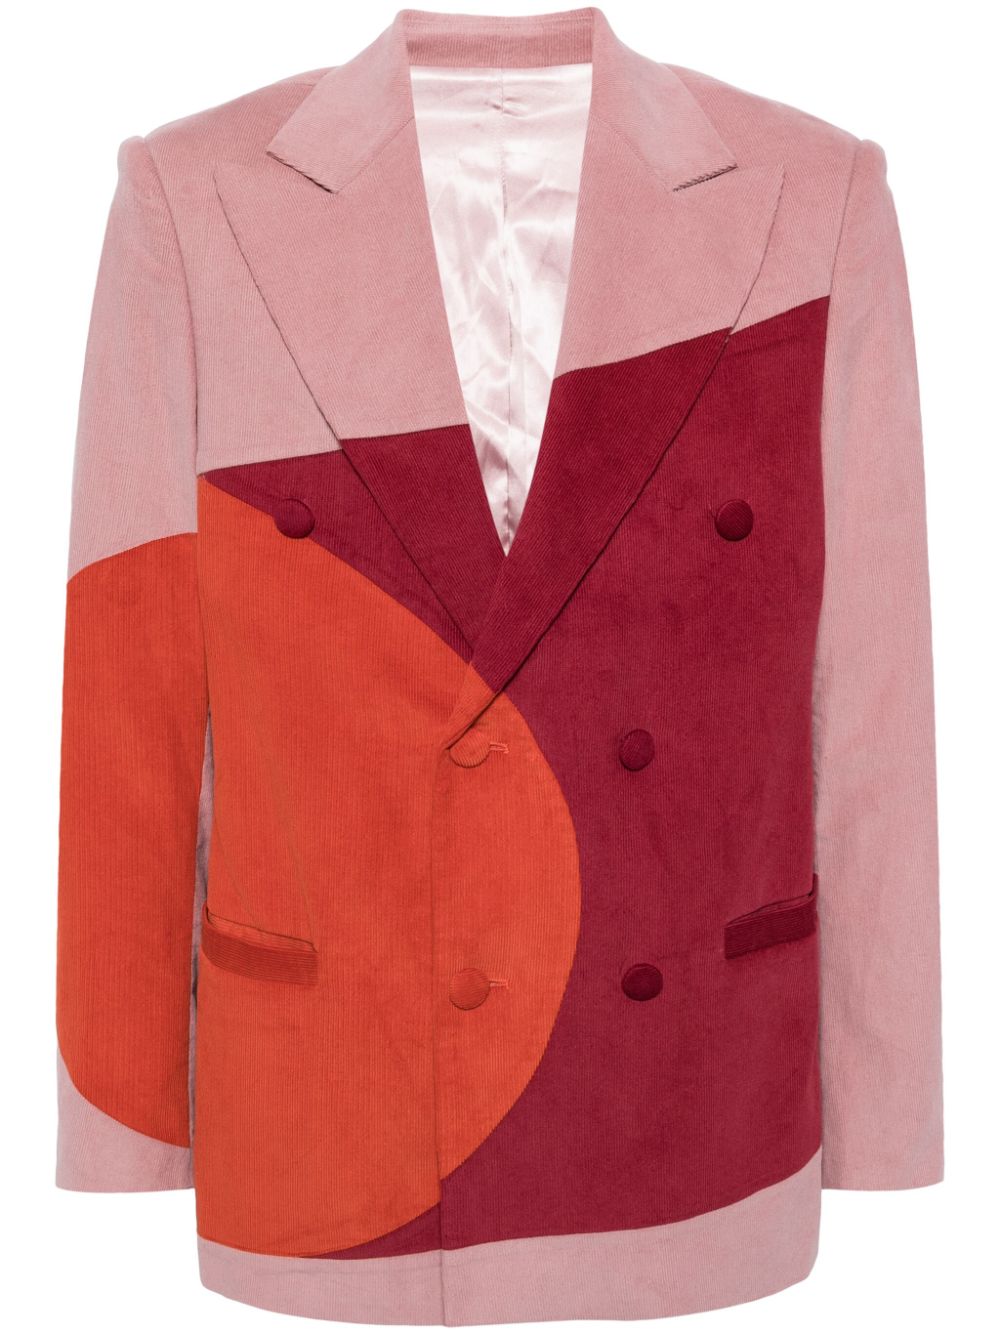 Geometric Shapes cotton blazer